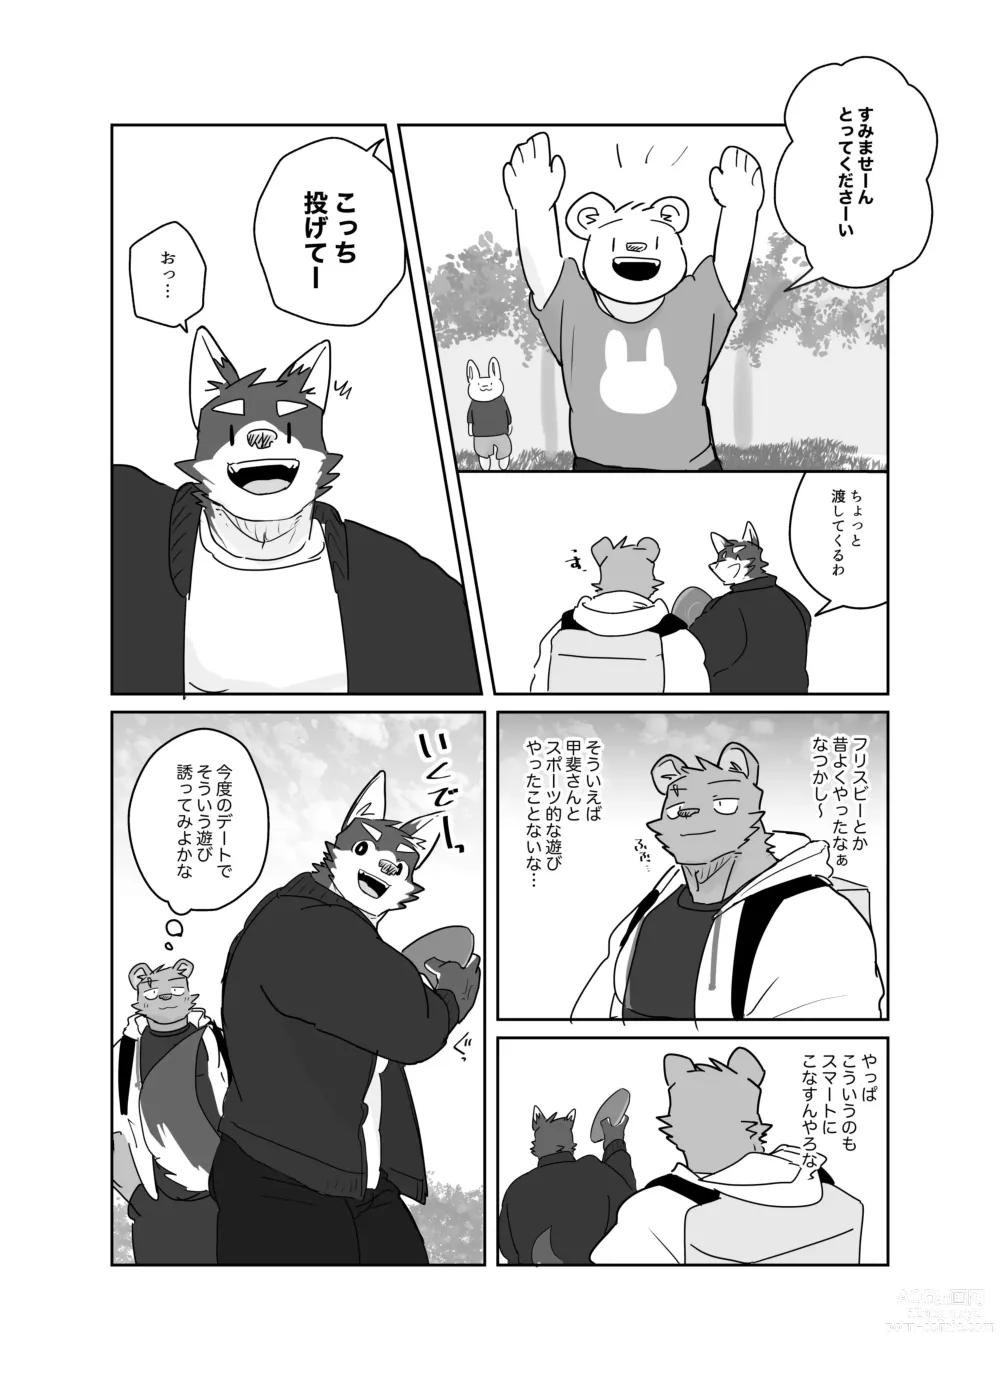 Page 2 of manga Frisbee